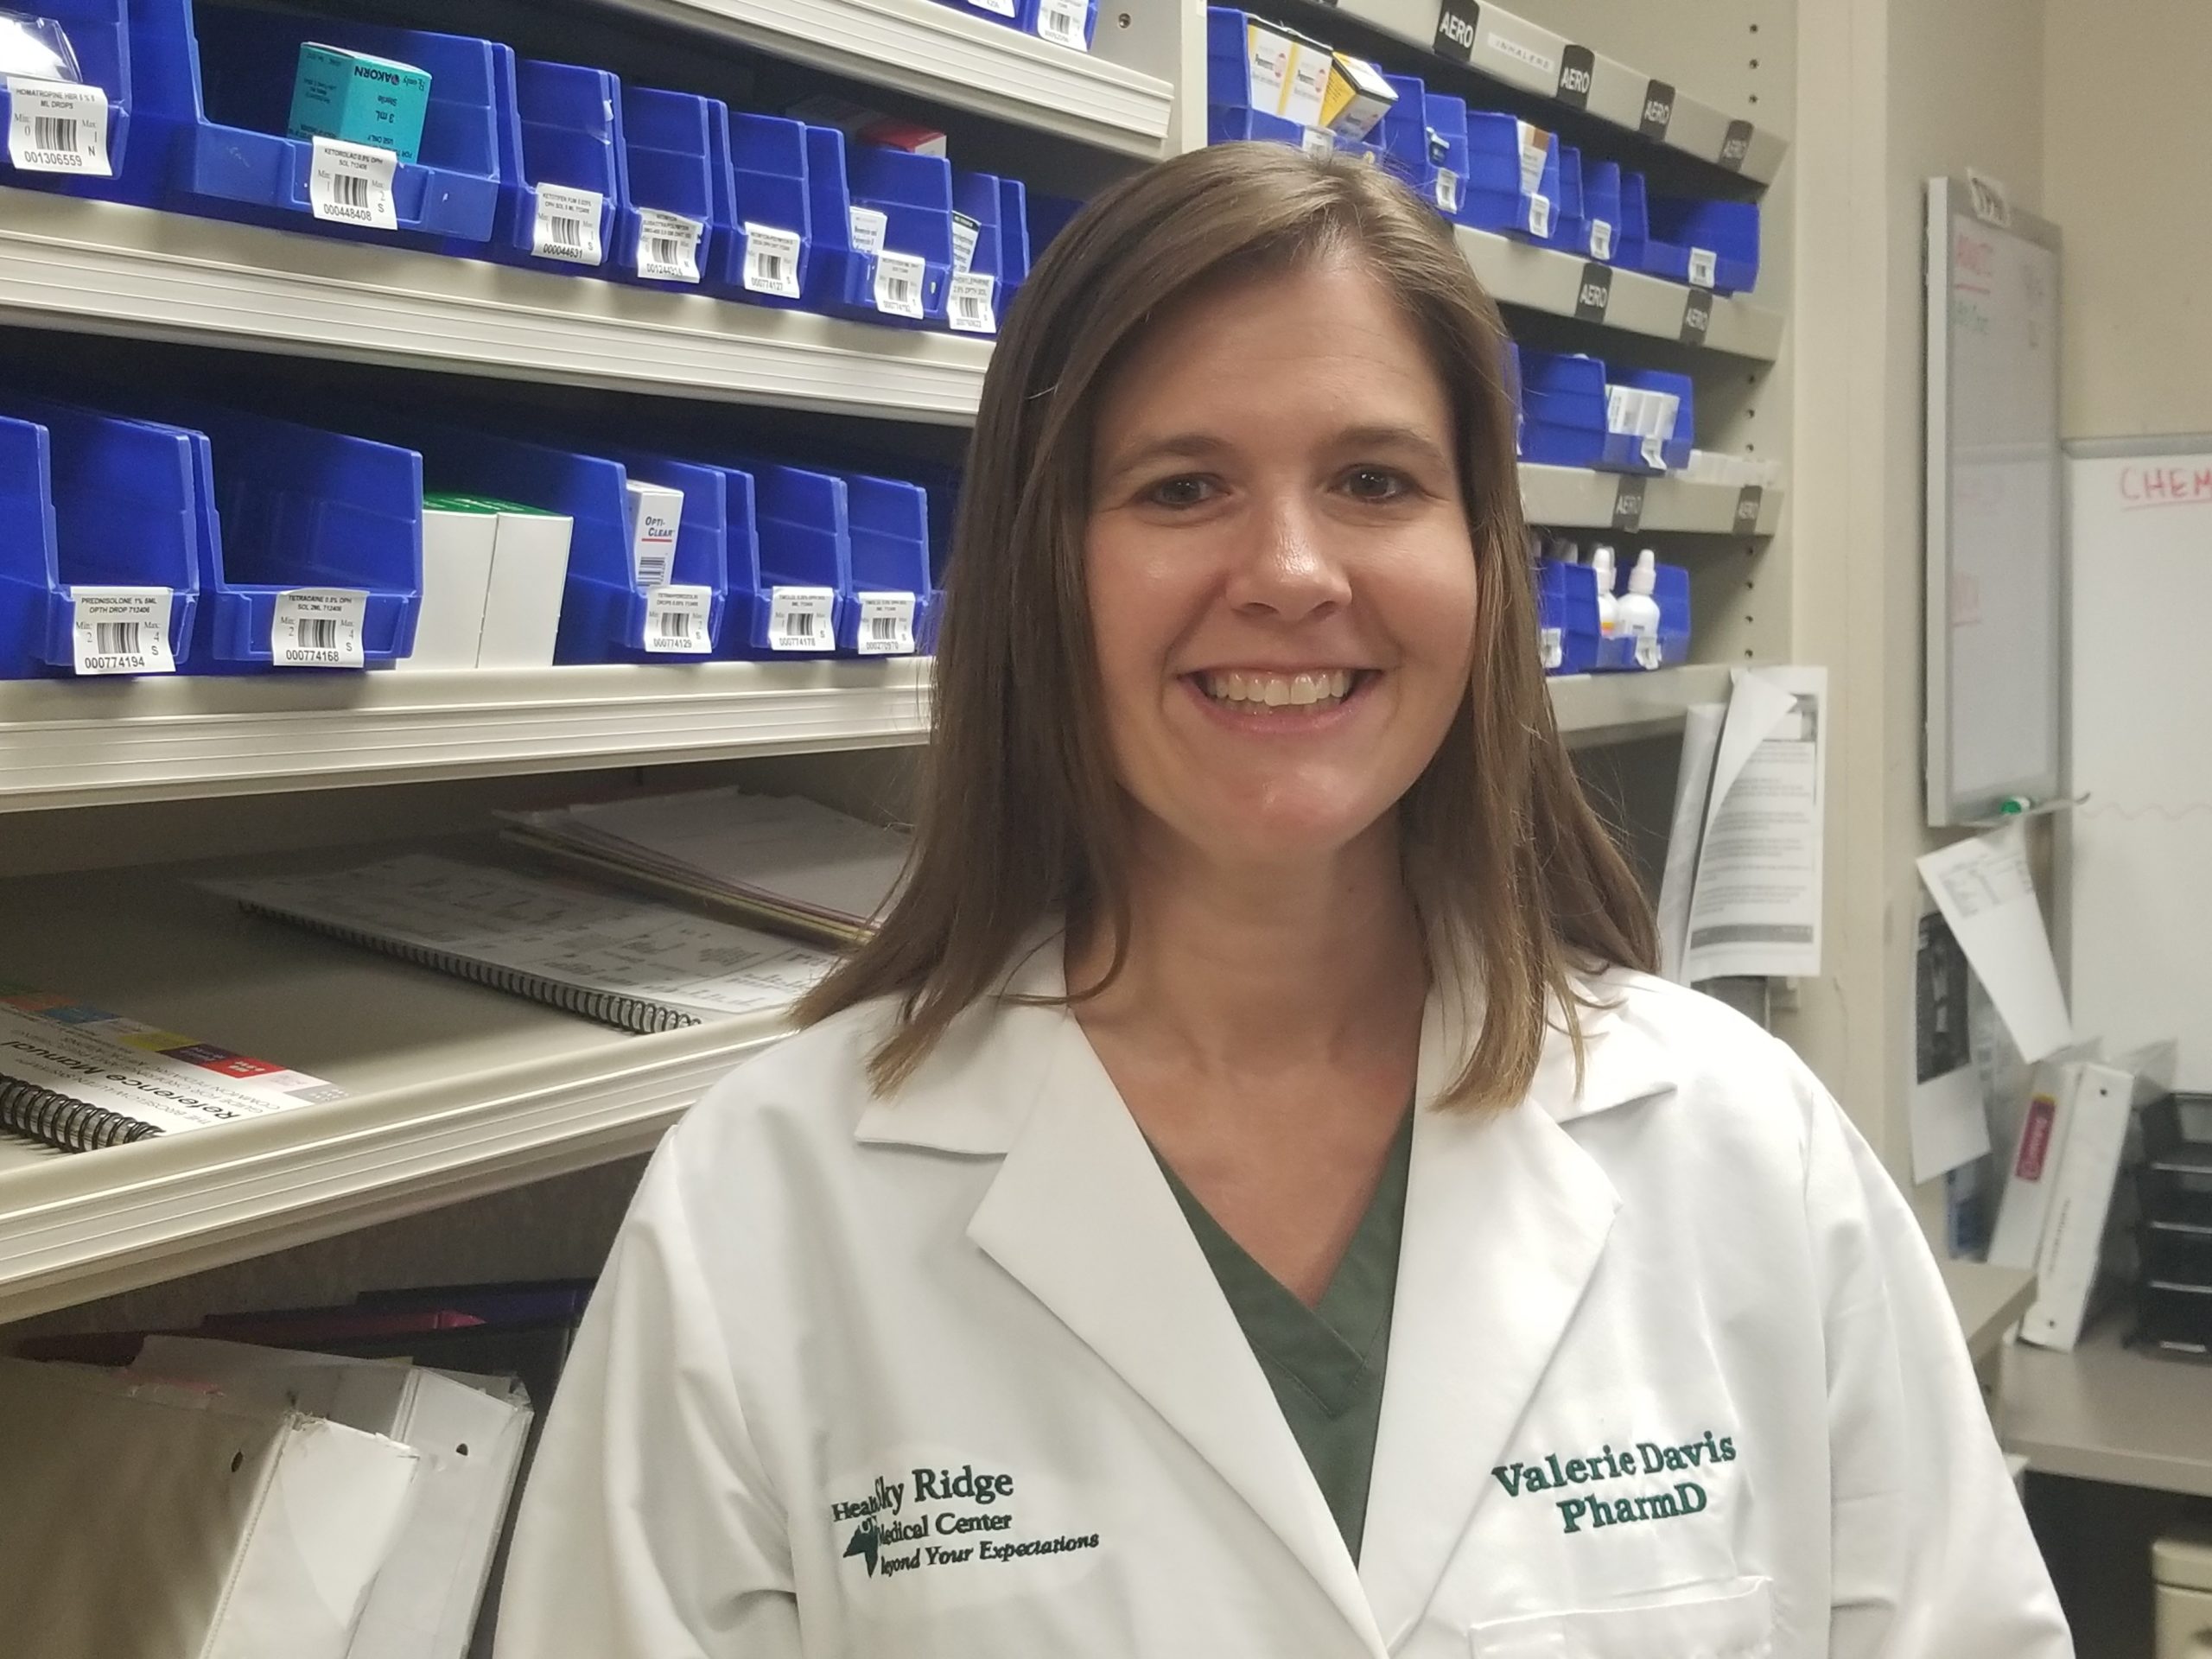 Female pharmacist wearing white lab coat